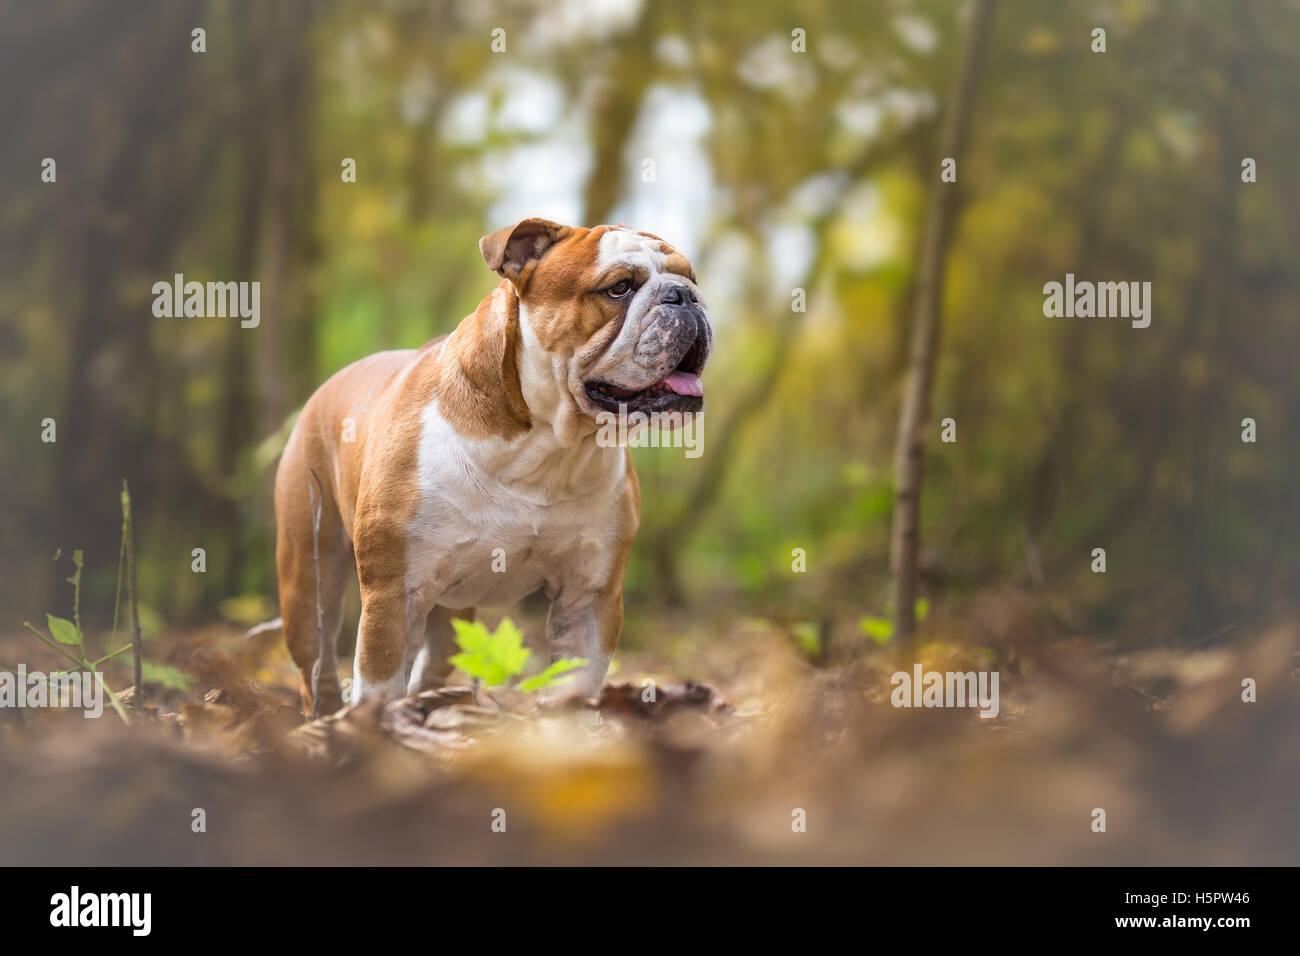 English Bulldog Dog at the forest Stock Photo